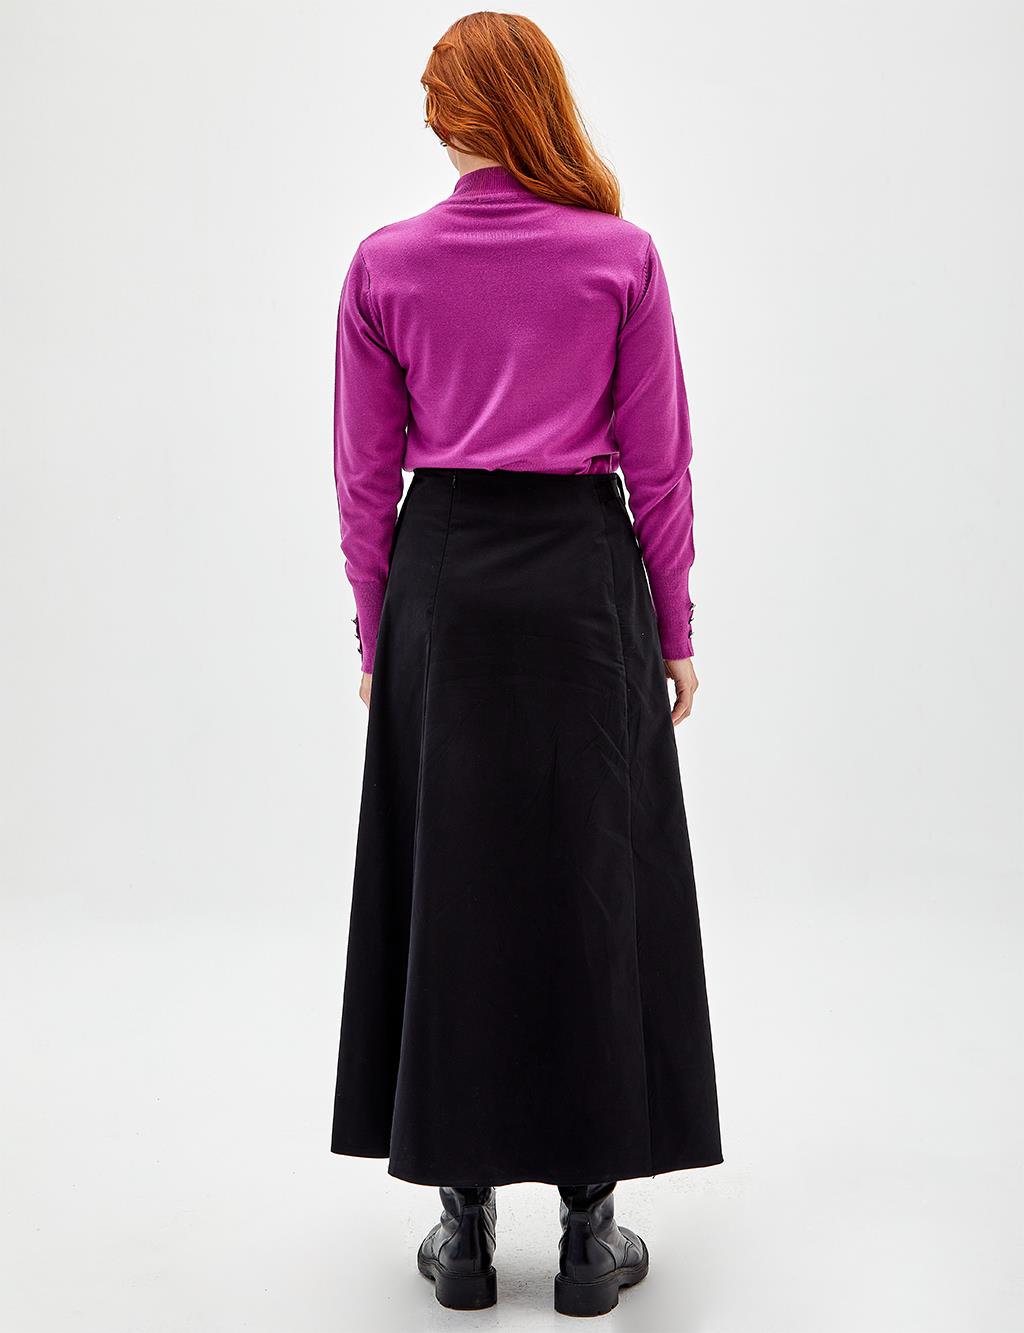 A-Line Skirt with Big Pockets Black